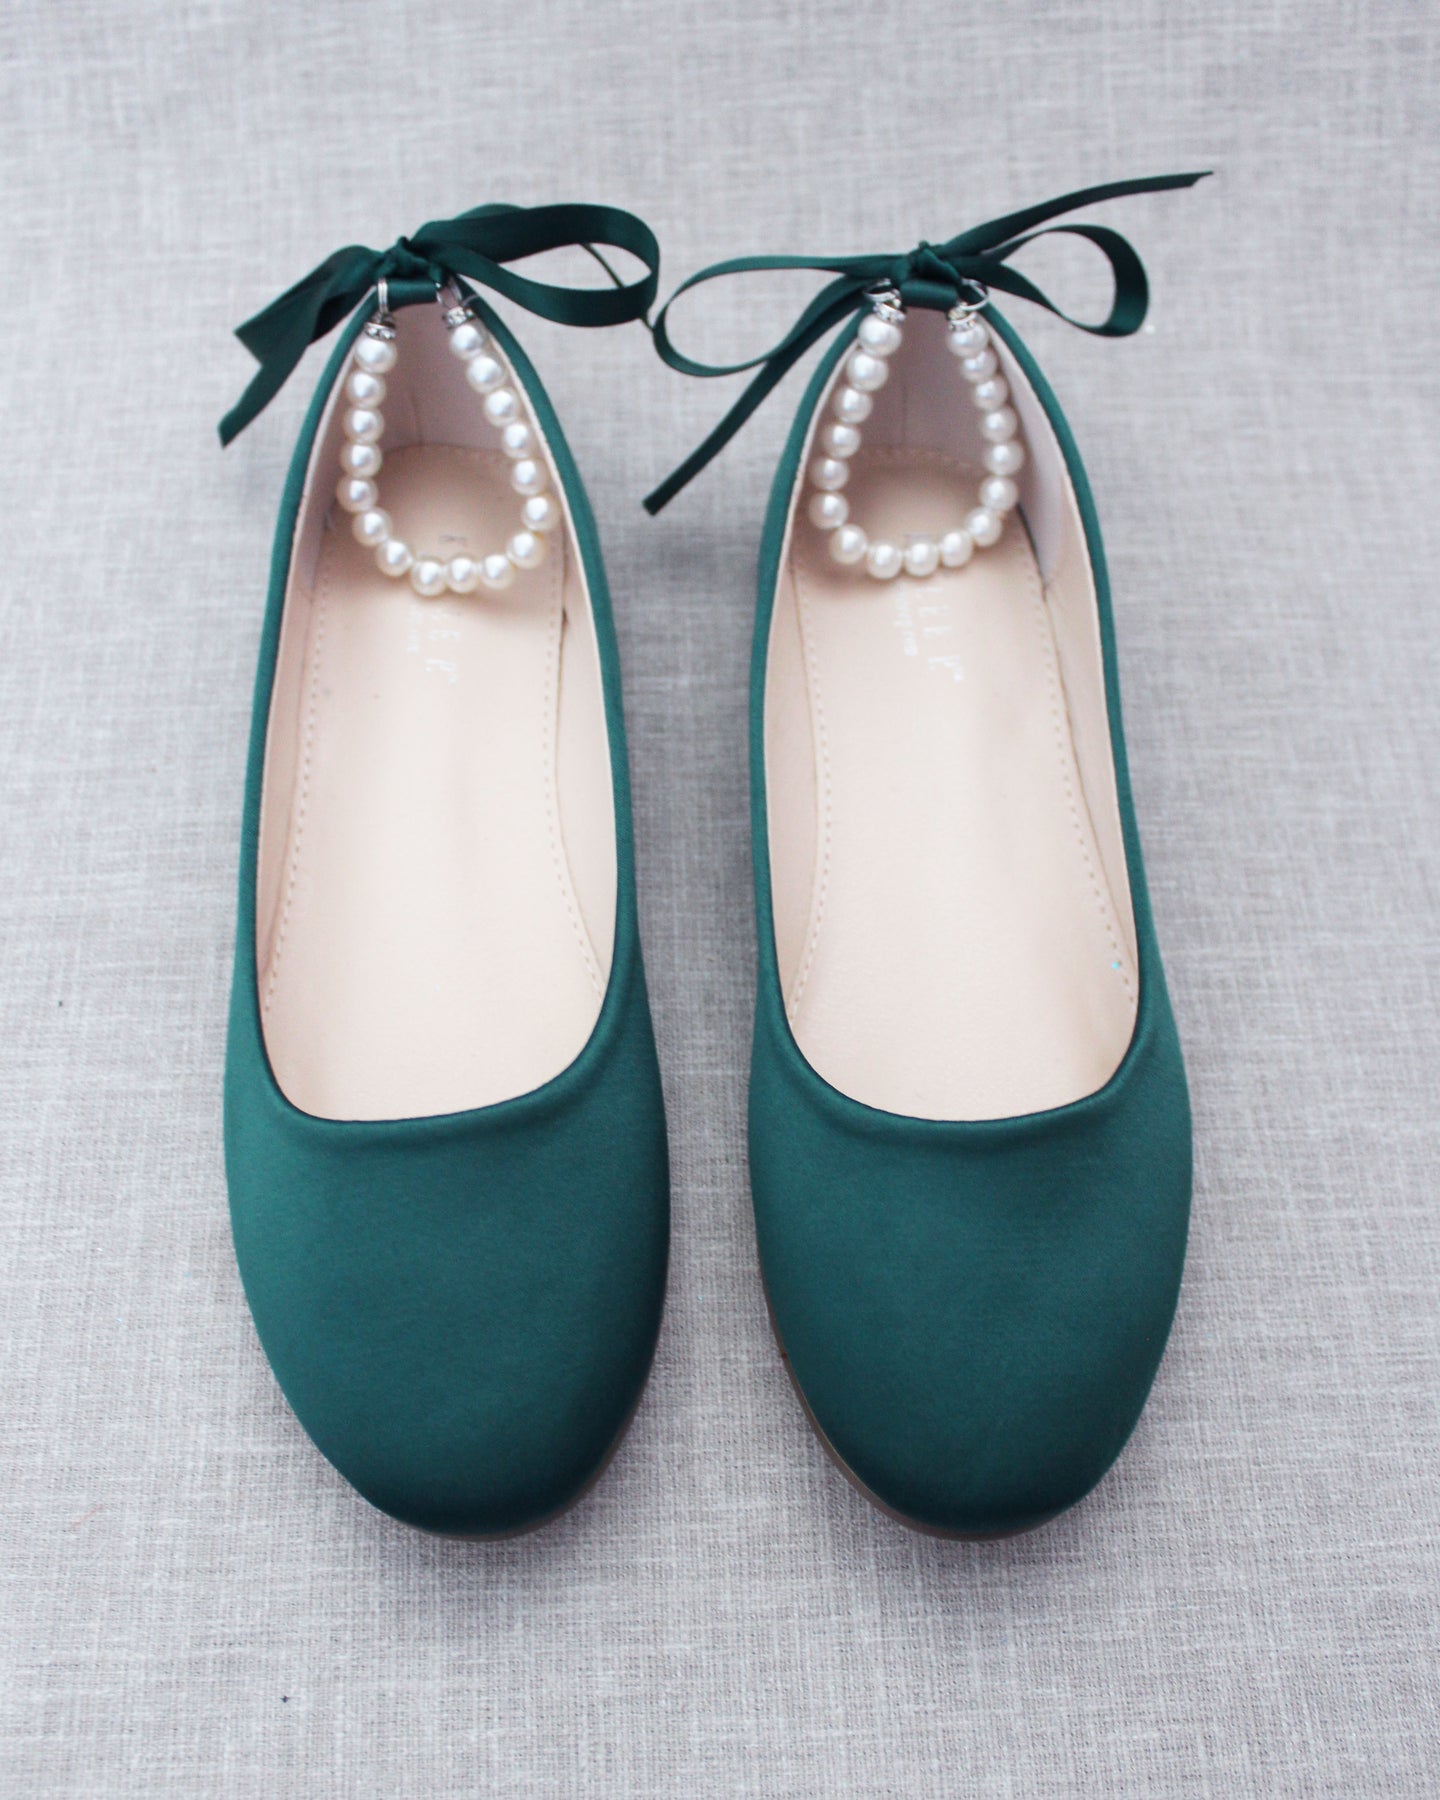 Dark Green Flat Shoes Deals - www.bridgepartnersllc.com 1692796580